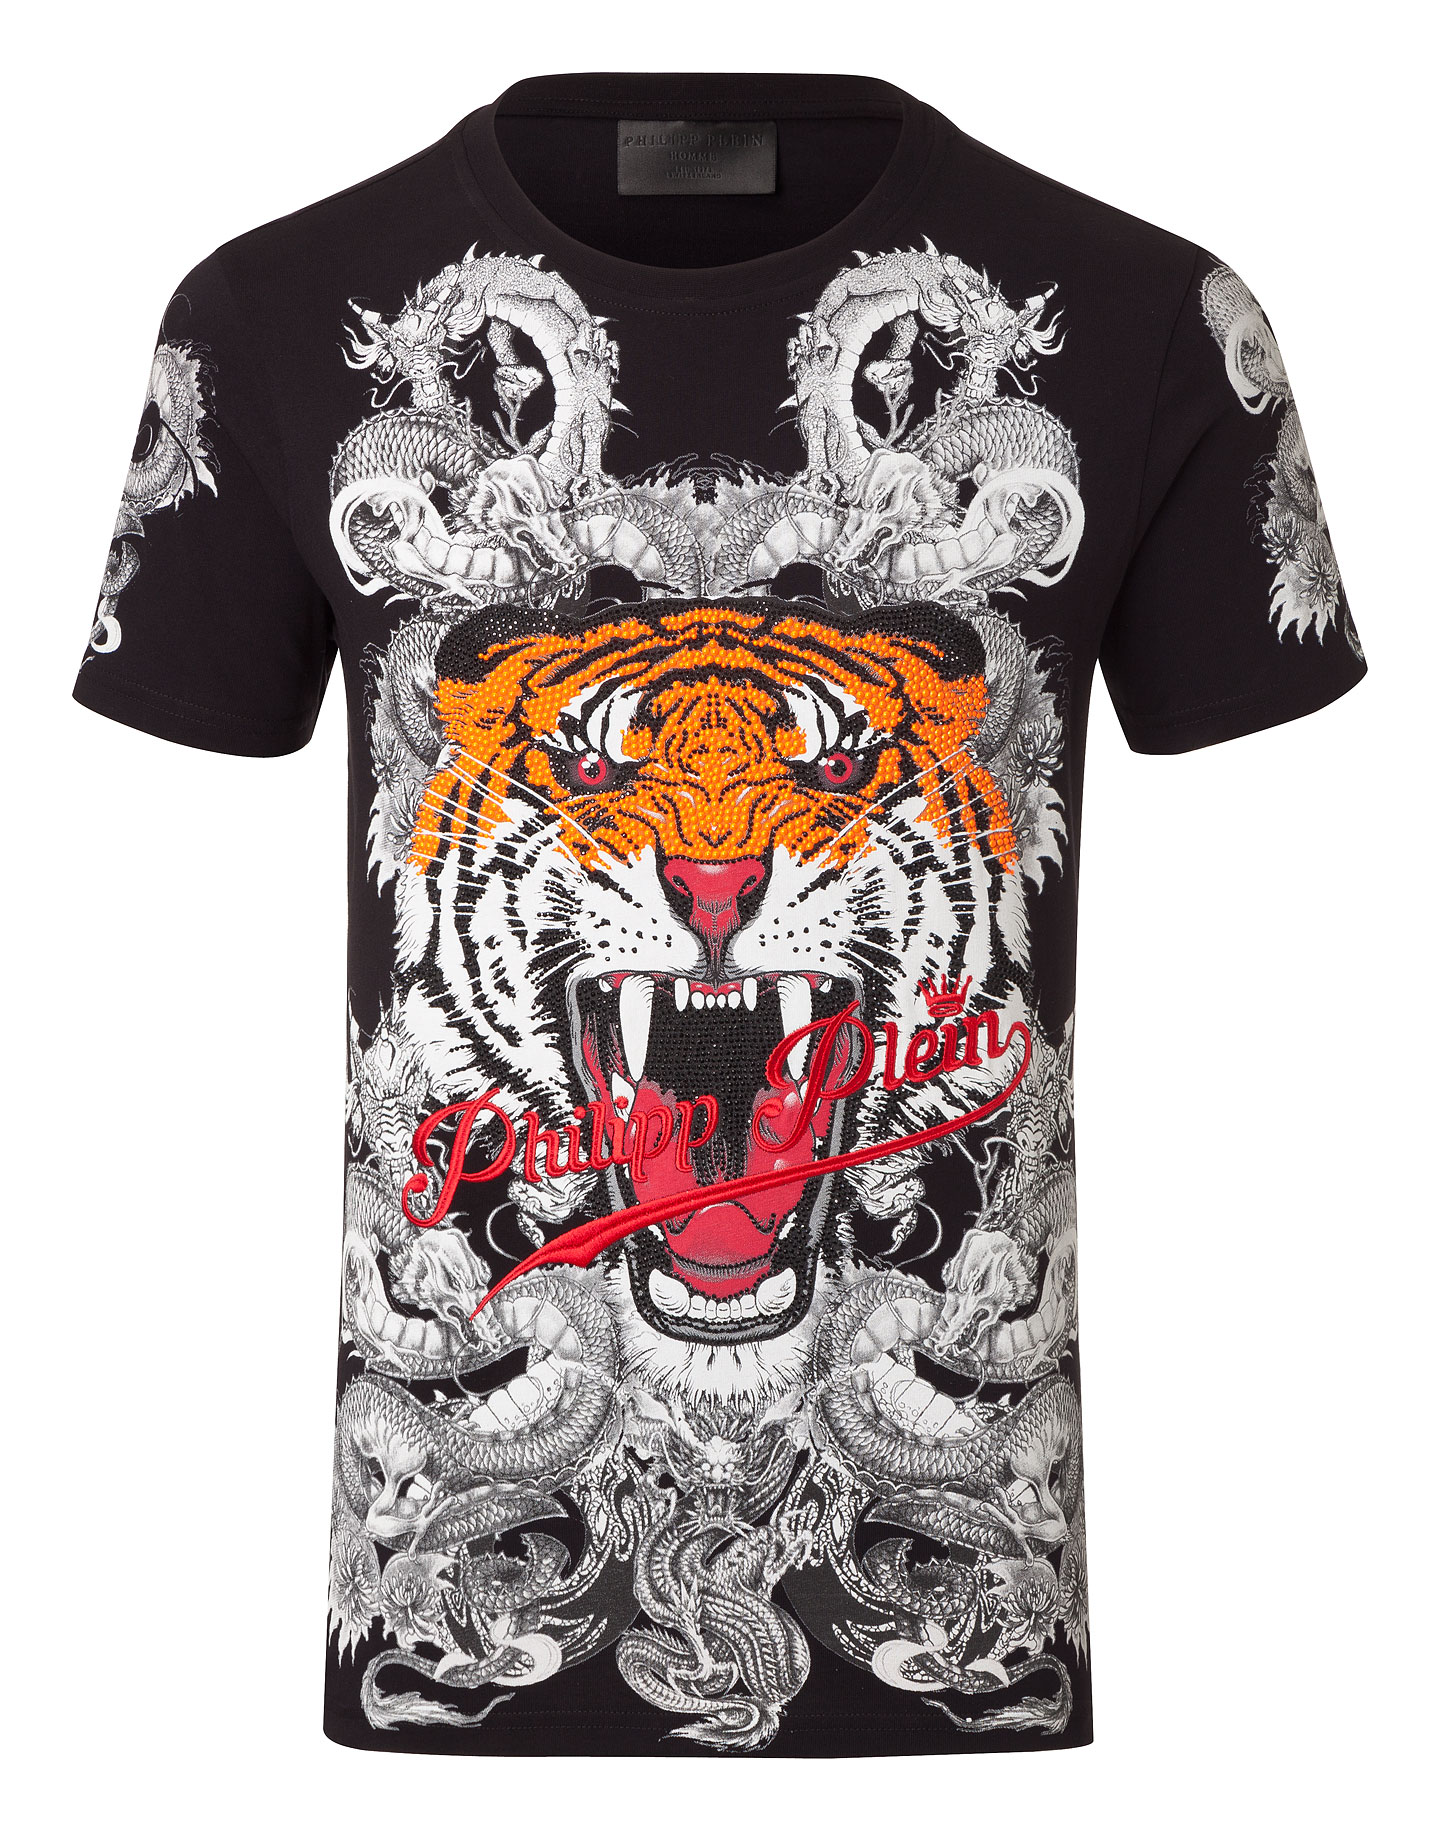 philipp plein tiger t shirt